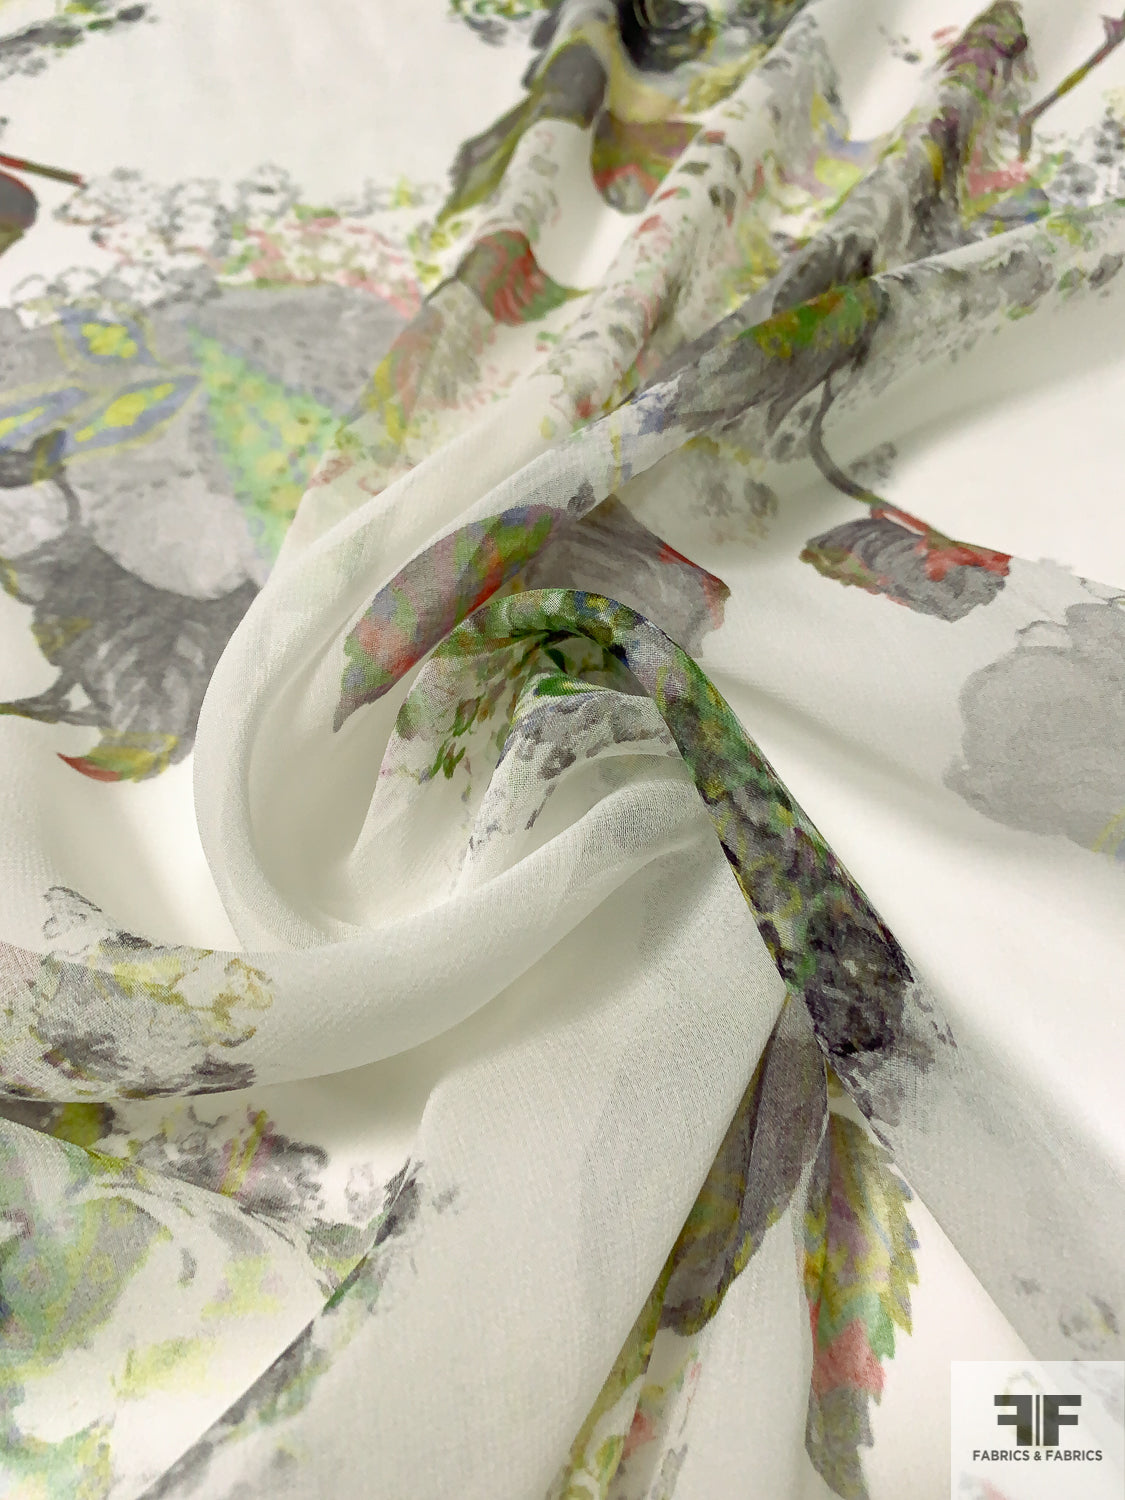 Floral Shrub Printed Silk Chiffon - Shades of Grey / Greens / Off-White